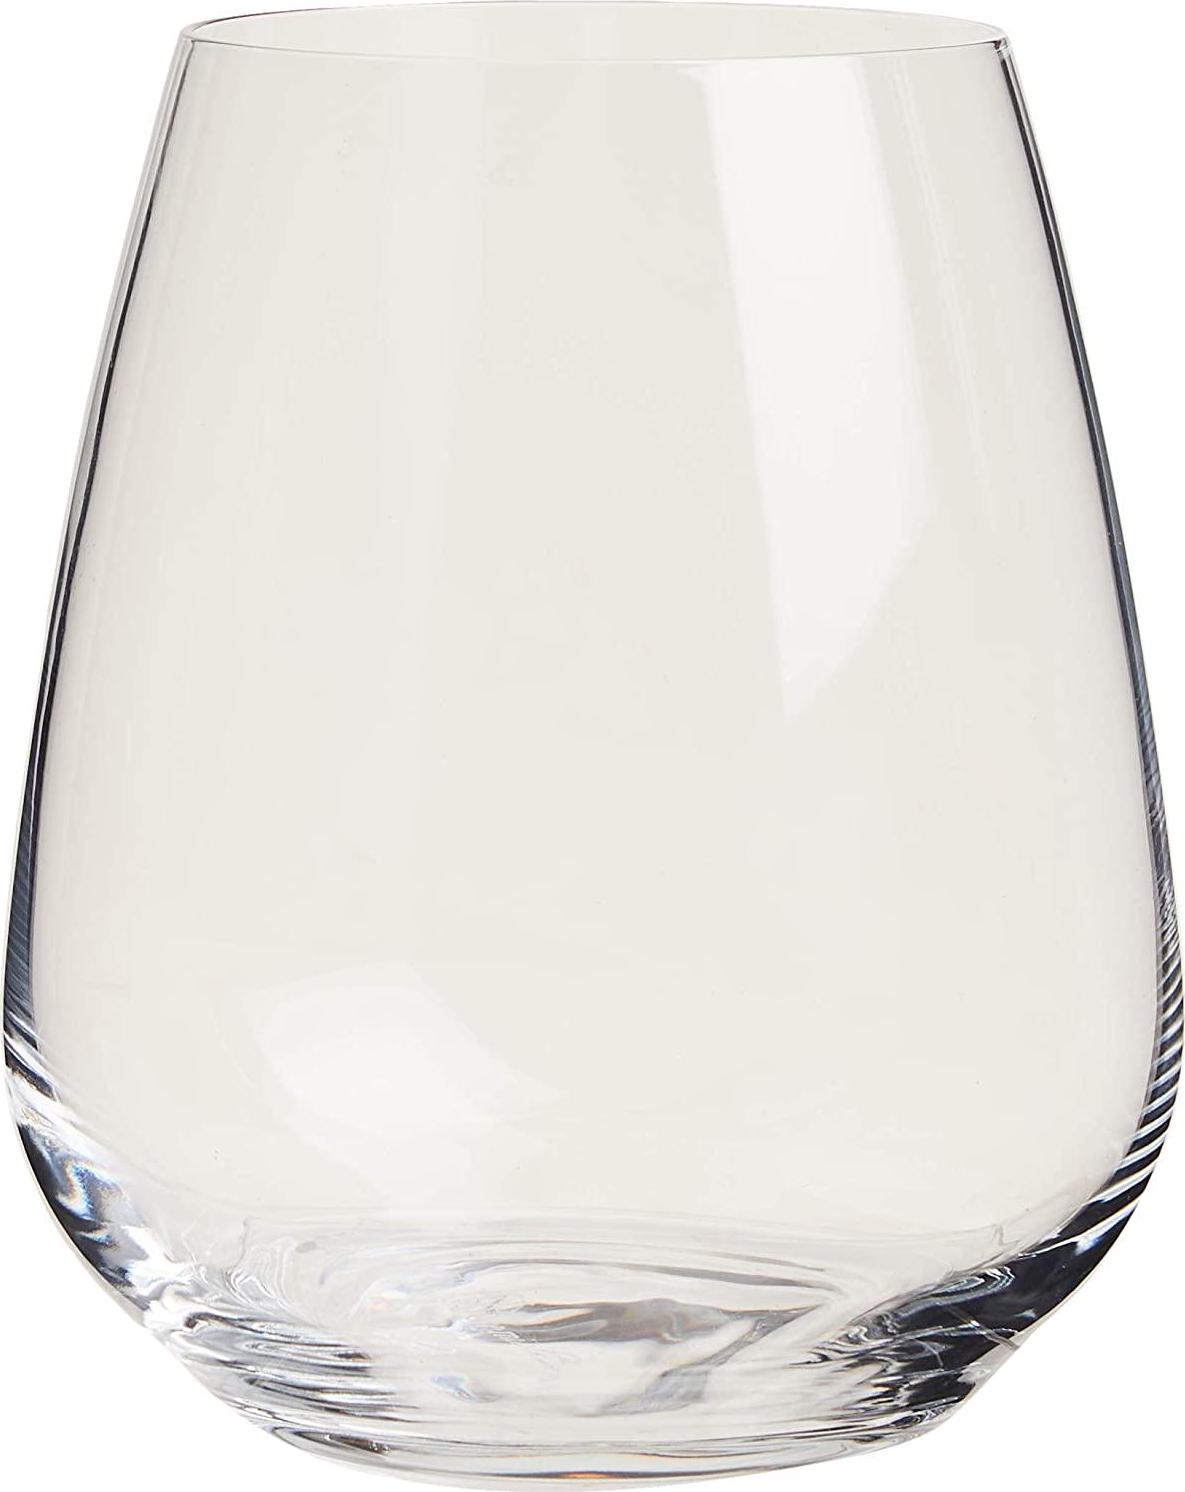 Luigi Bormioli, Luigi Bormioli 10291/02 Atelier Stemless Cabernet 670ml, Durable Wine Glass, Lead Free Crystal Wine Tumbler, Italian aerating Wine Glasses (Colour: Clear), Quantity: 1 Set, 6 Pieces, 23.25